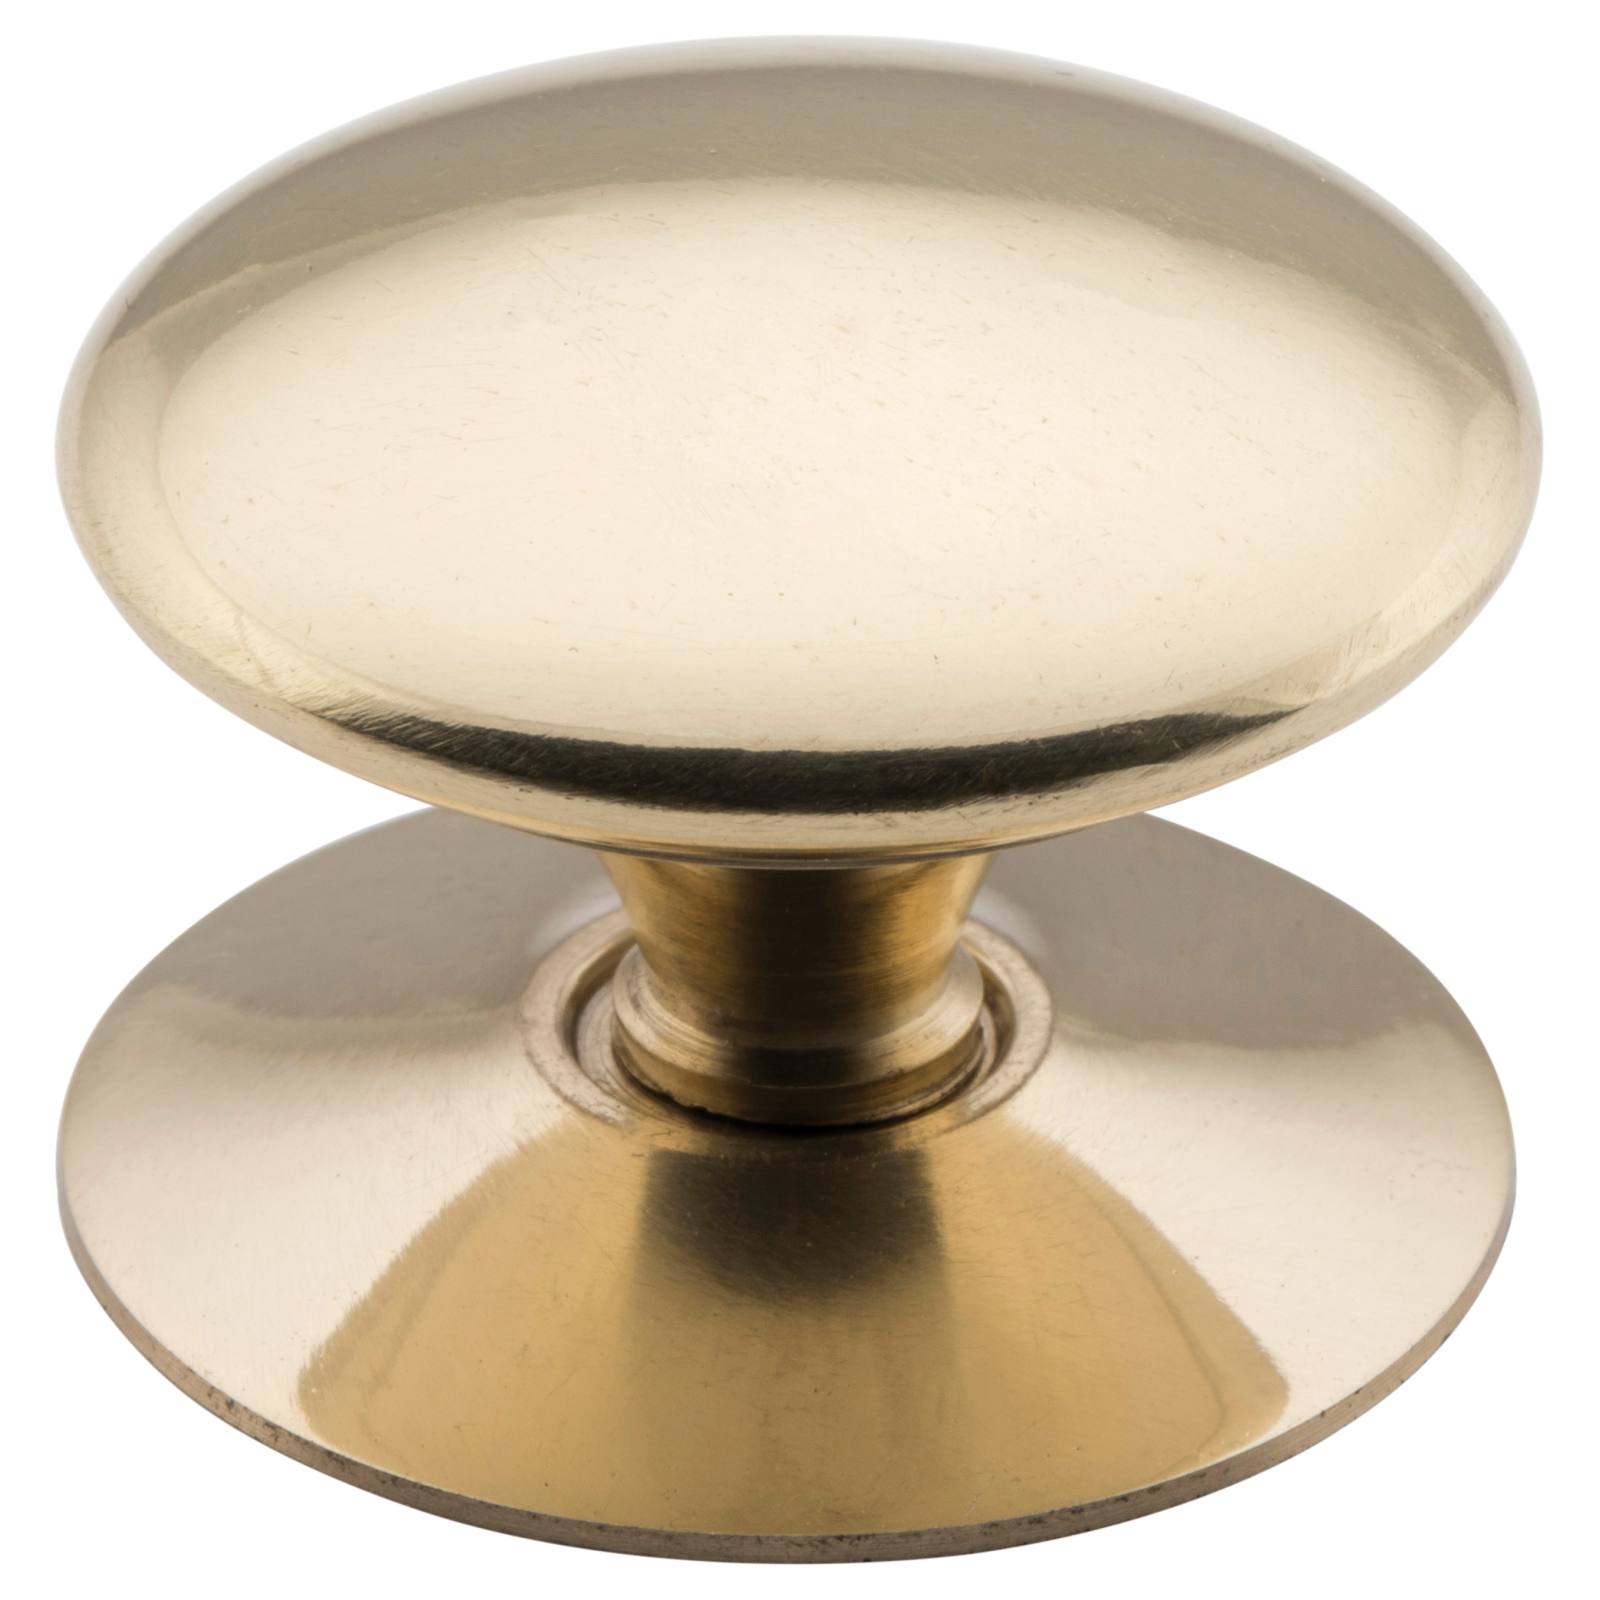 3.8cm Victorian Cupboard Knob, Polished Brass